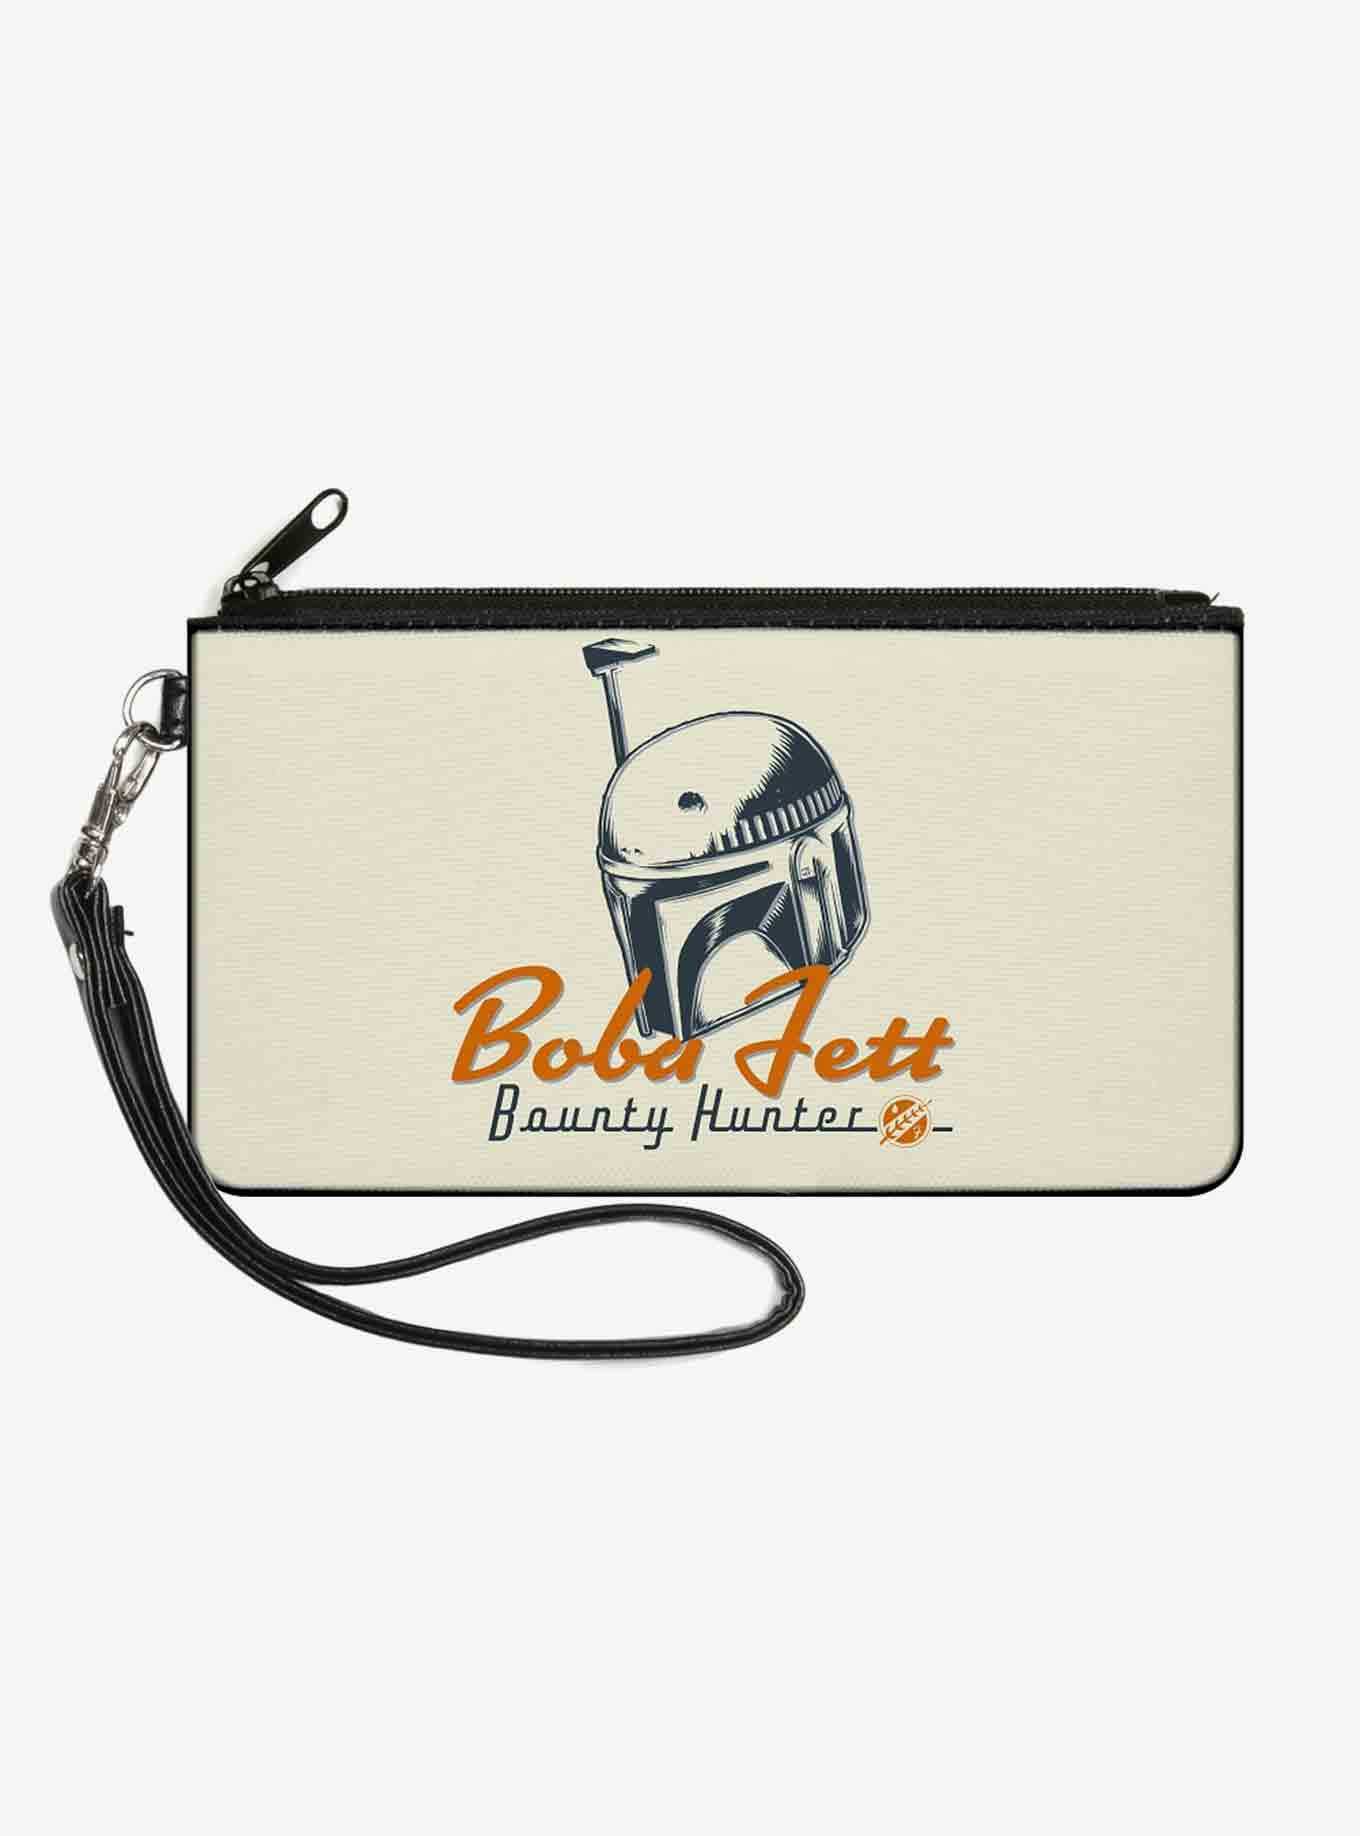 Star Wars The Book of Boba Fett Bounty Hunter Helmet Canvas Zip Clutch Wallet, , hi-res